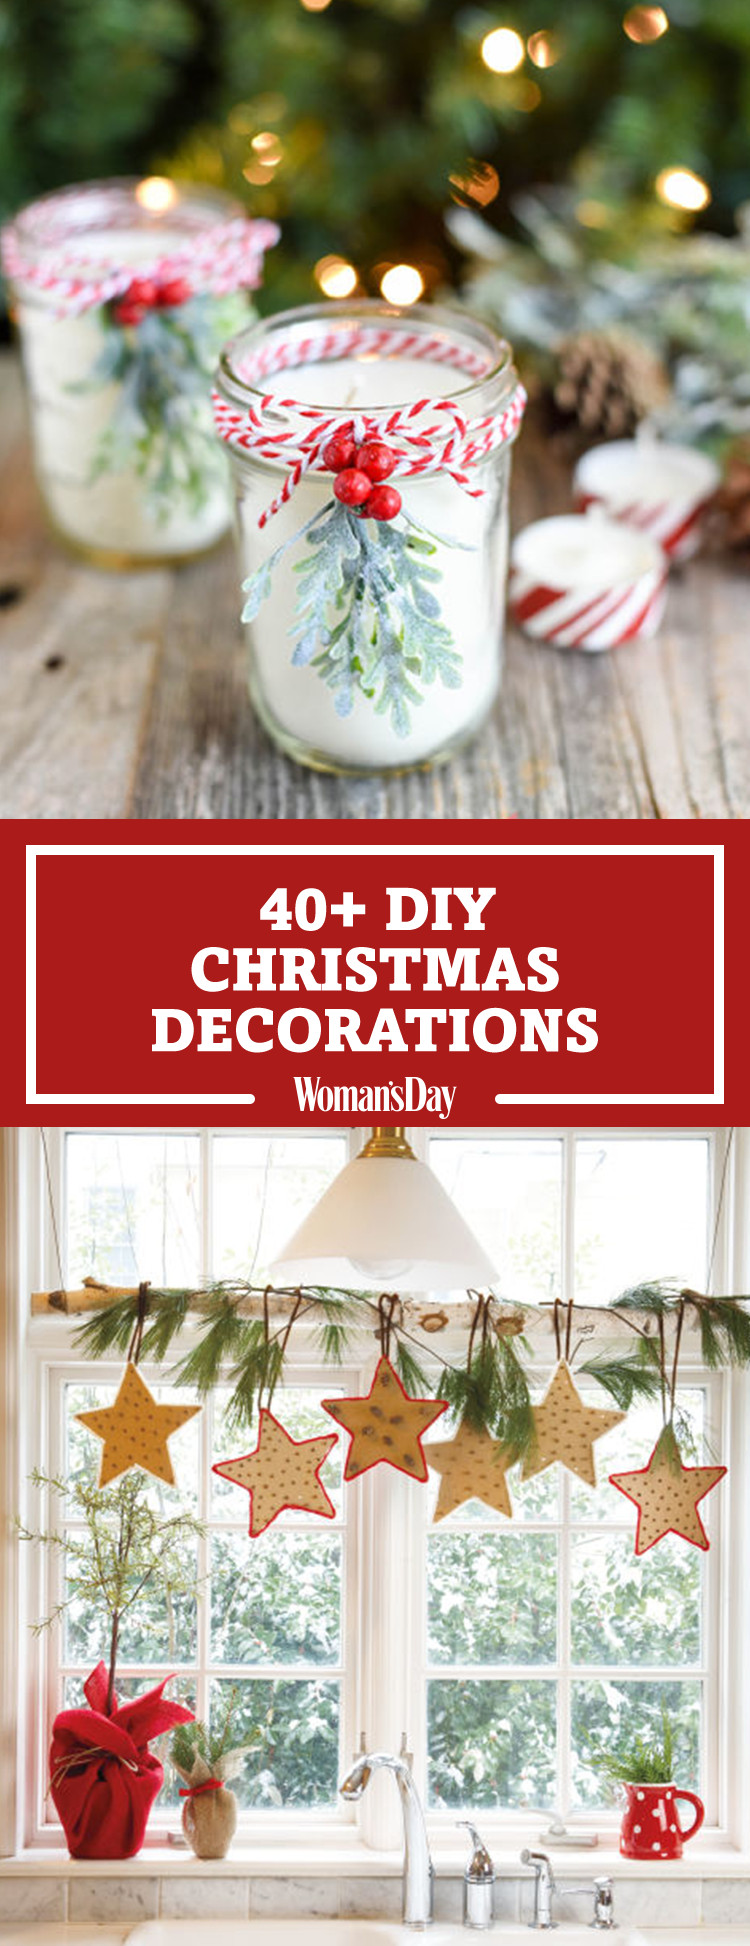 DIY Christmas Decorations Ideas
 47 Easy DIY Christmas Decorations Homemade Ideas for